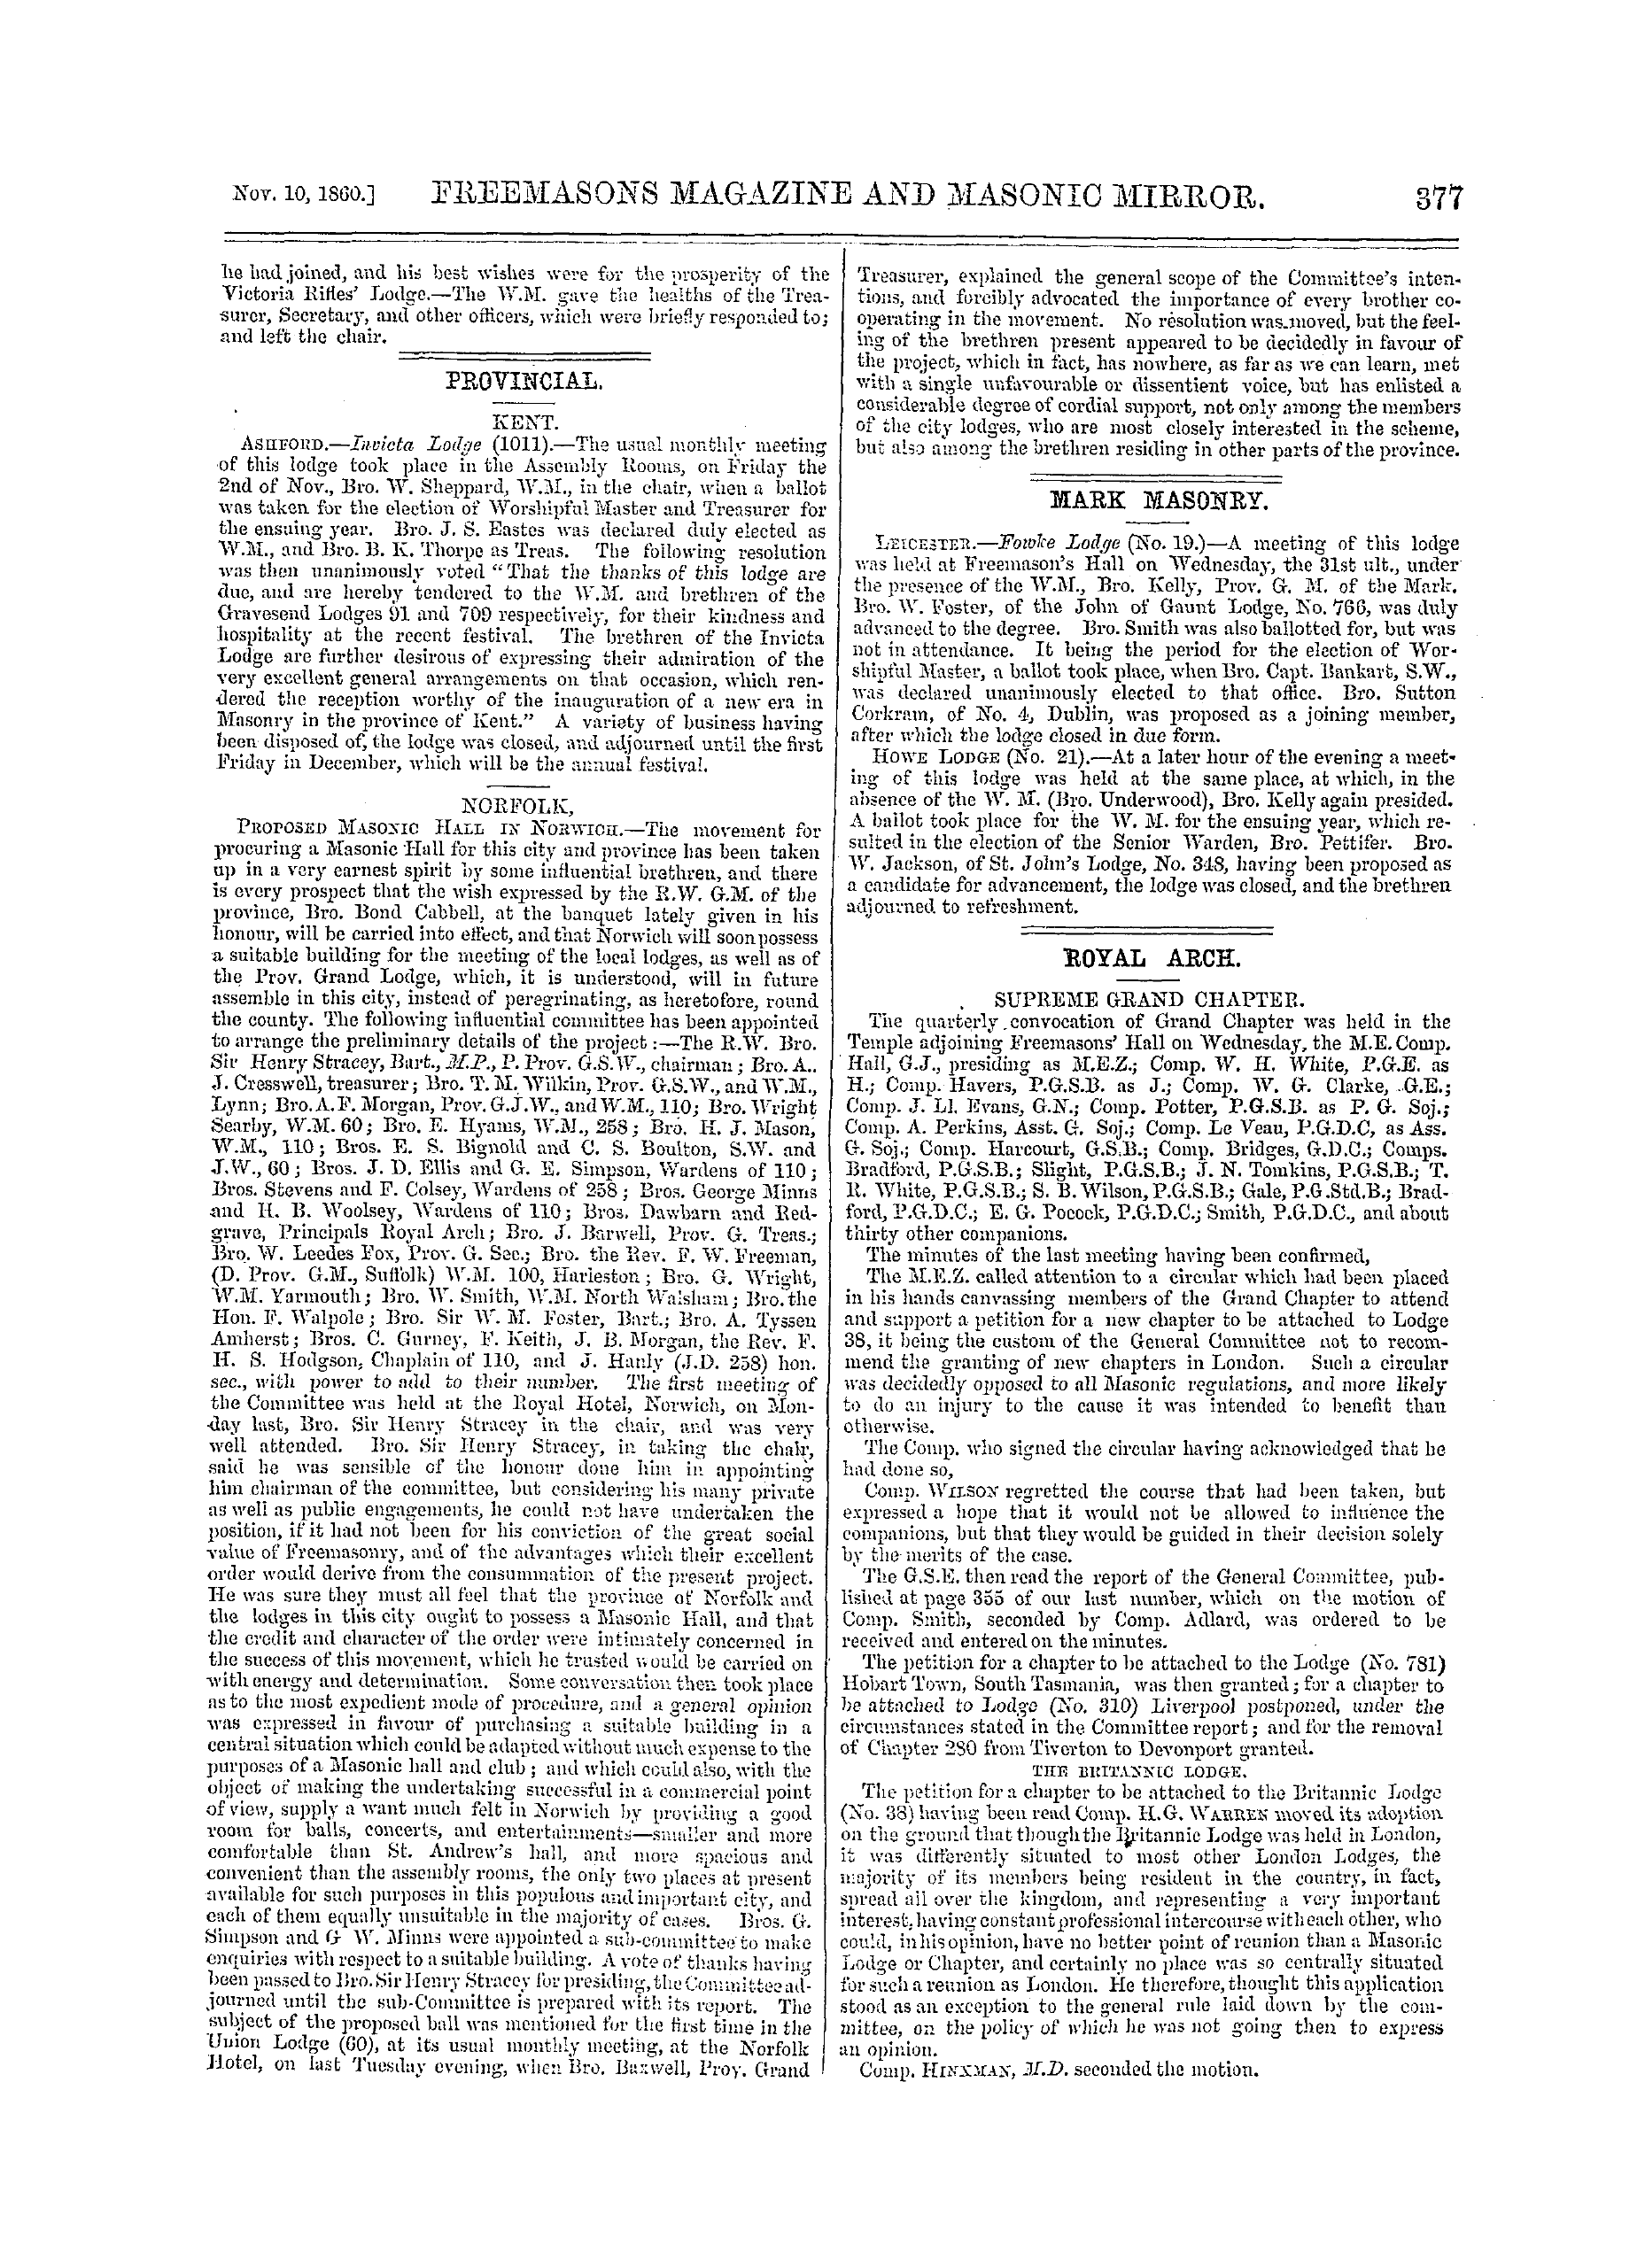 The Freemasons' Monthly Magazine: 1860-11-10 - Provincial.